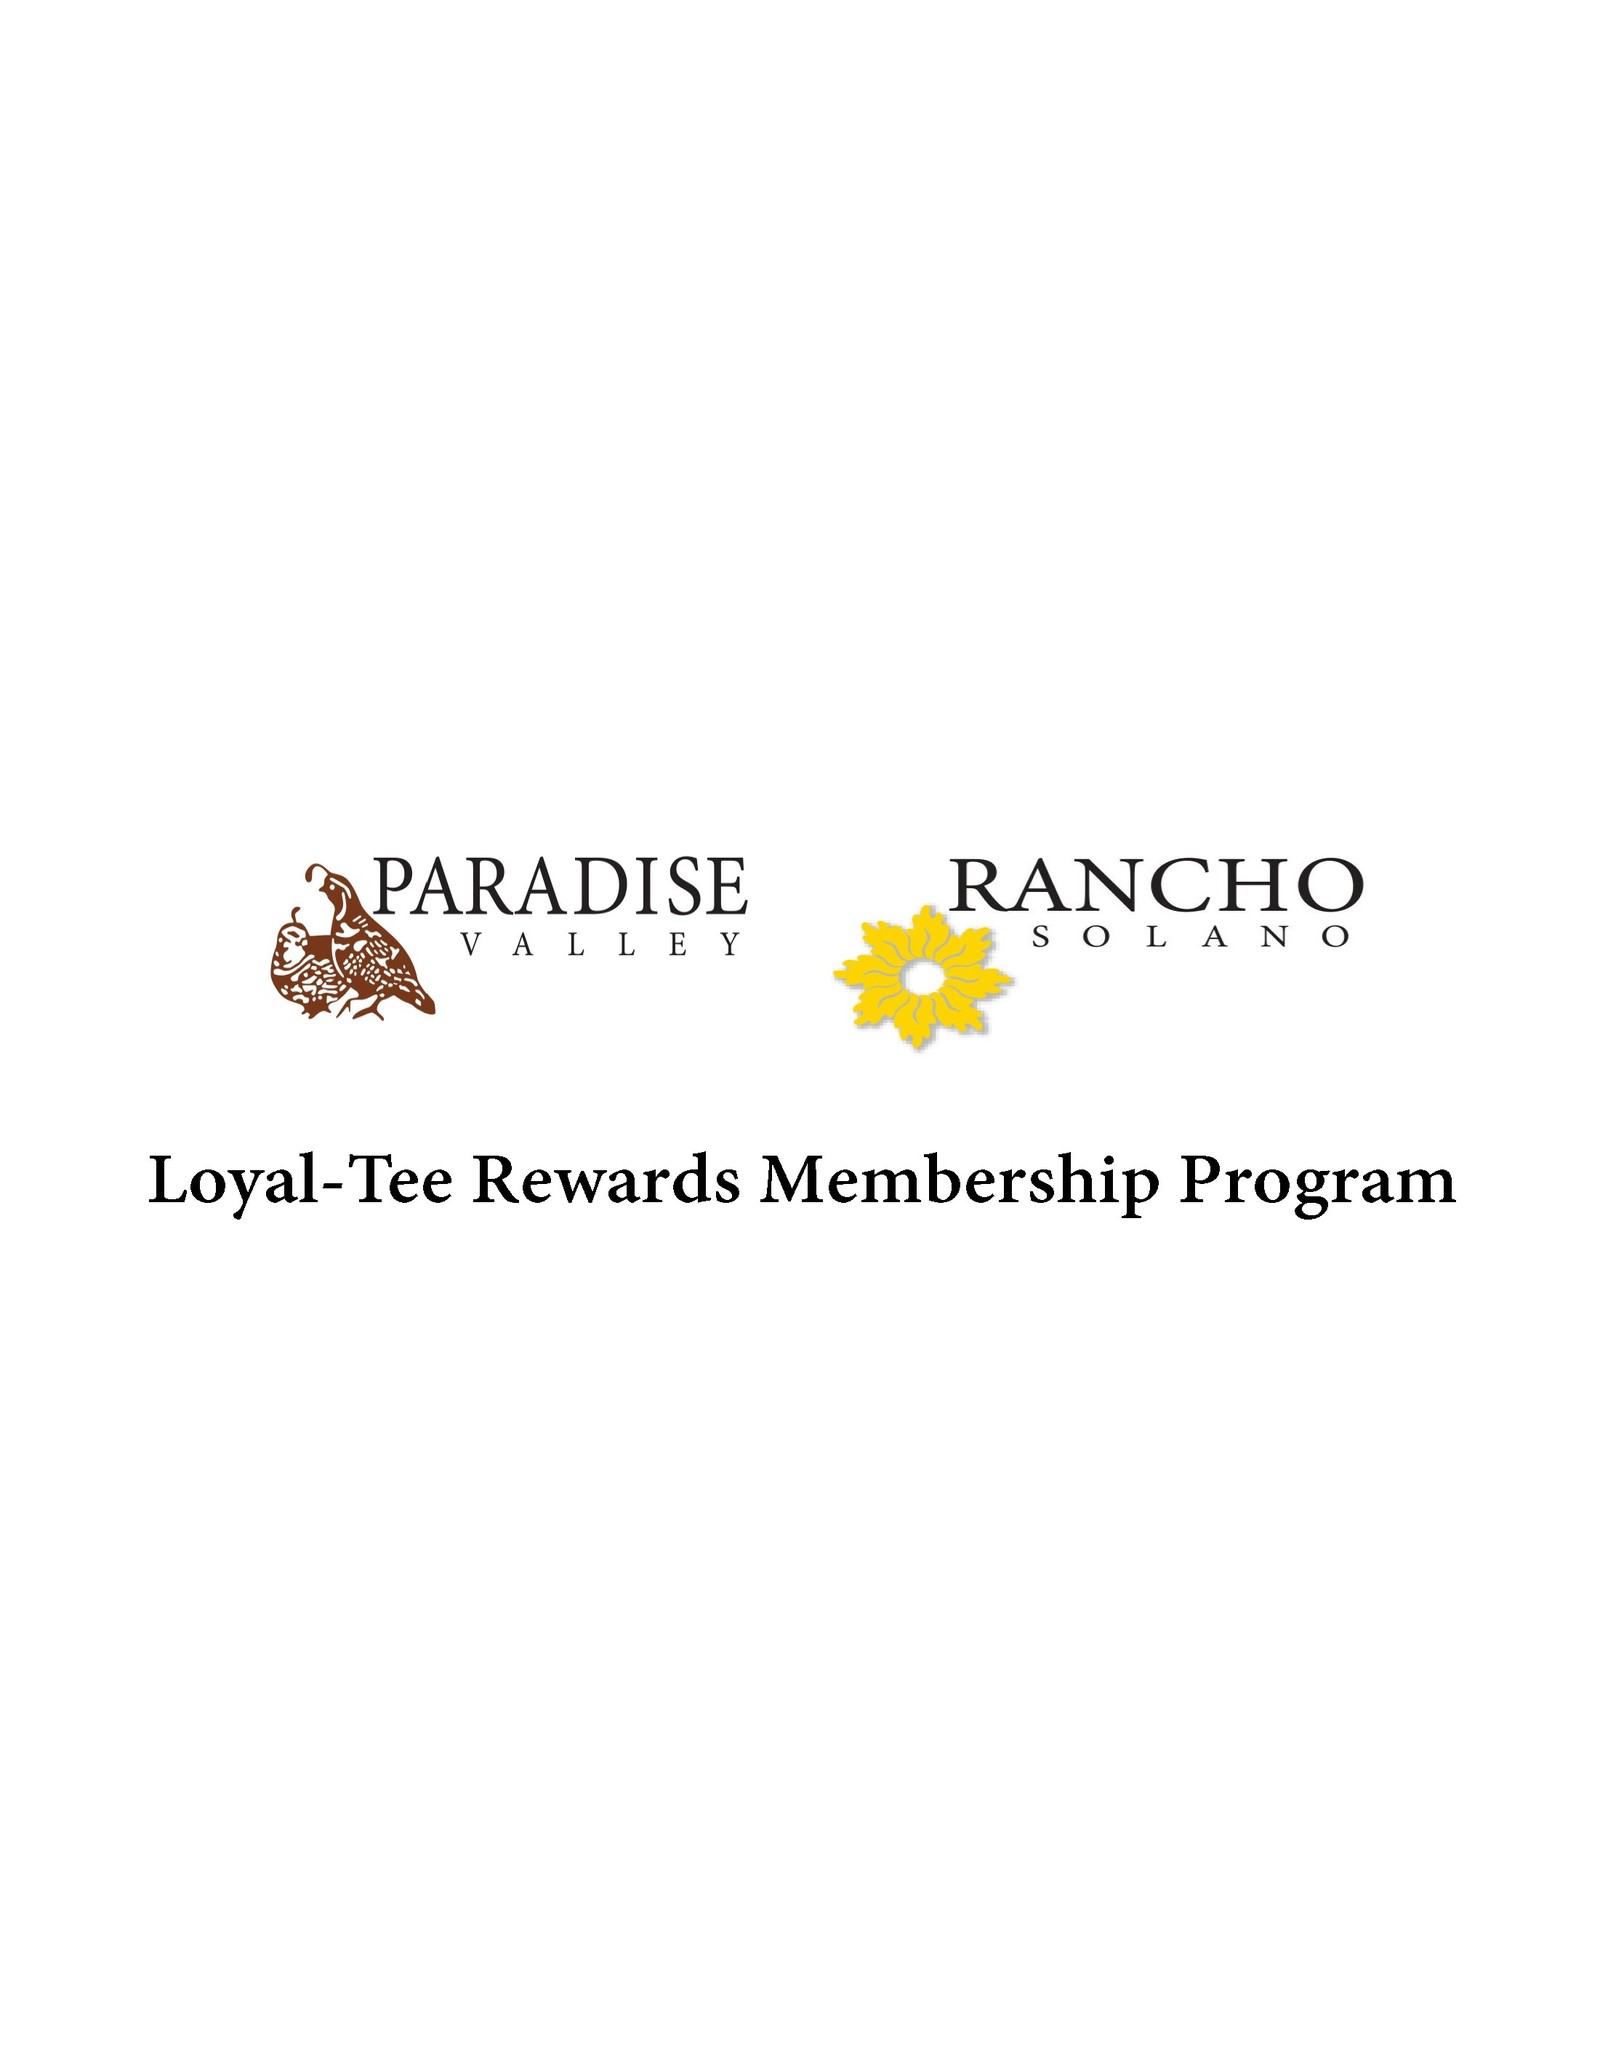 Paradise Valley & Rancho  Solano Loyal-Tee Rewards